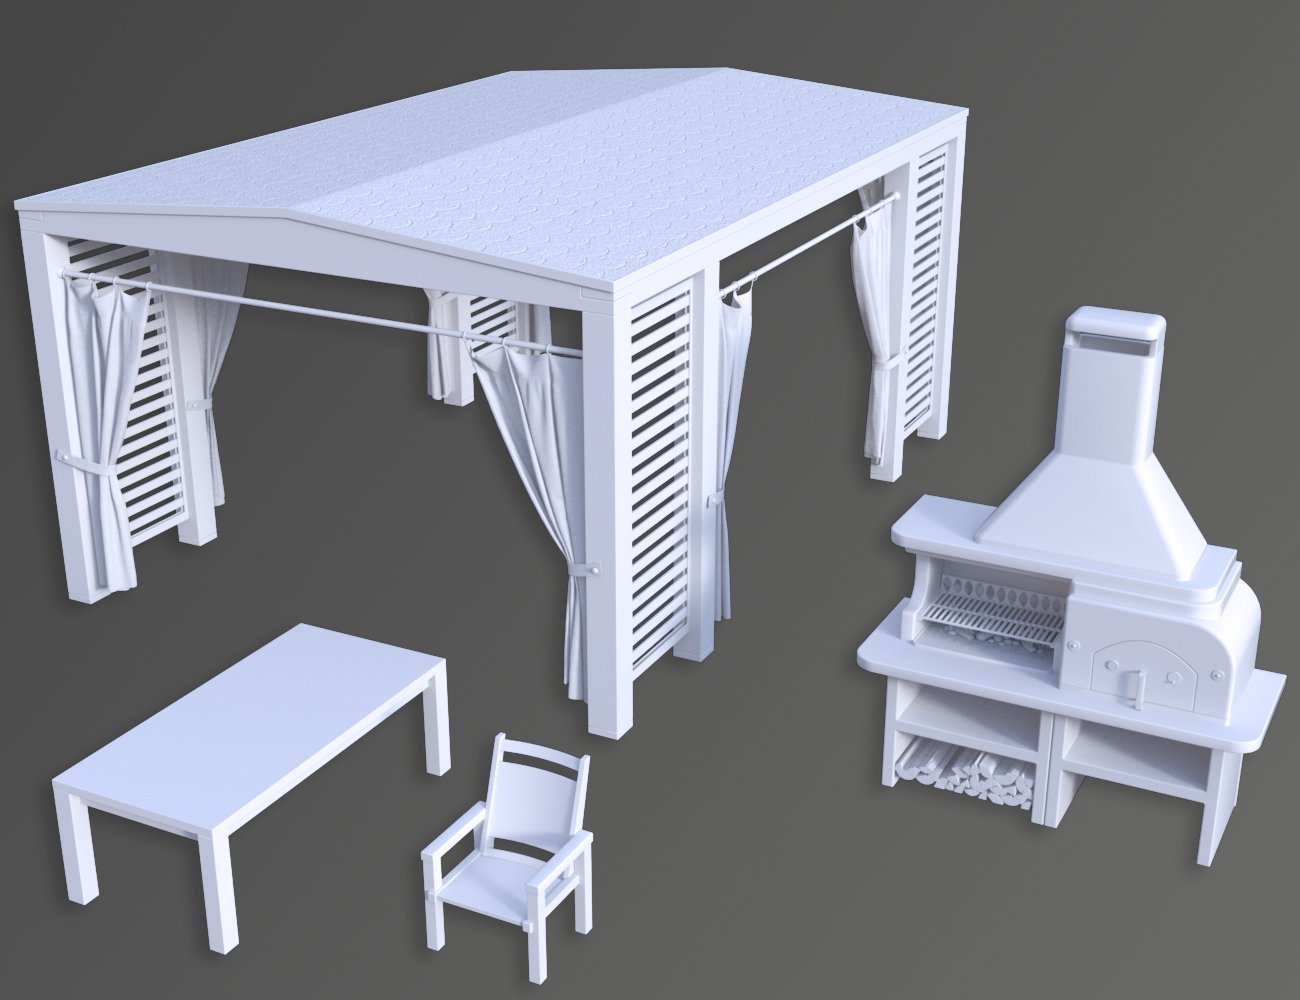 Modern House 3 by: petipet, 3D Models by Daz 3D